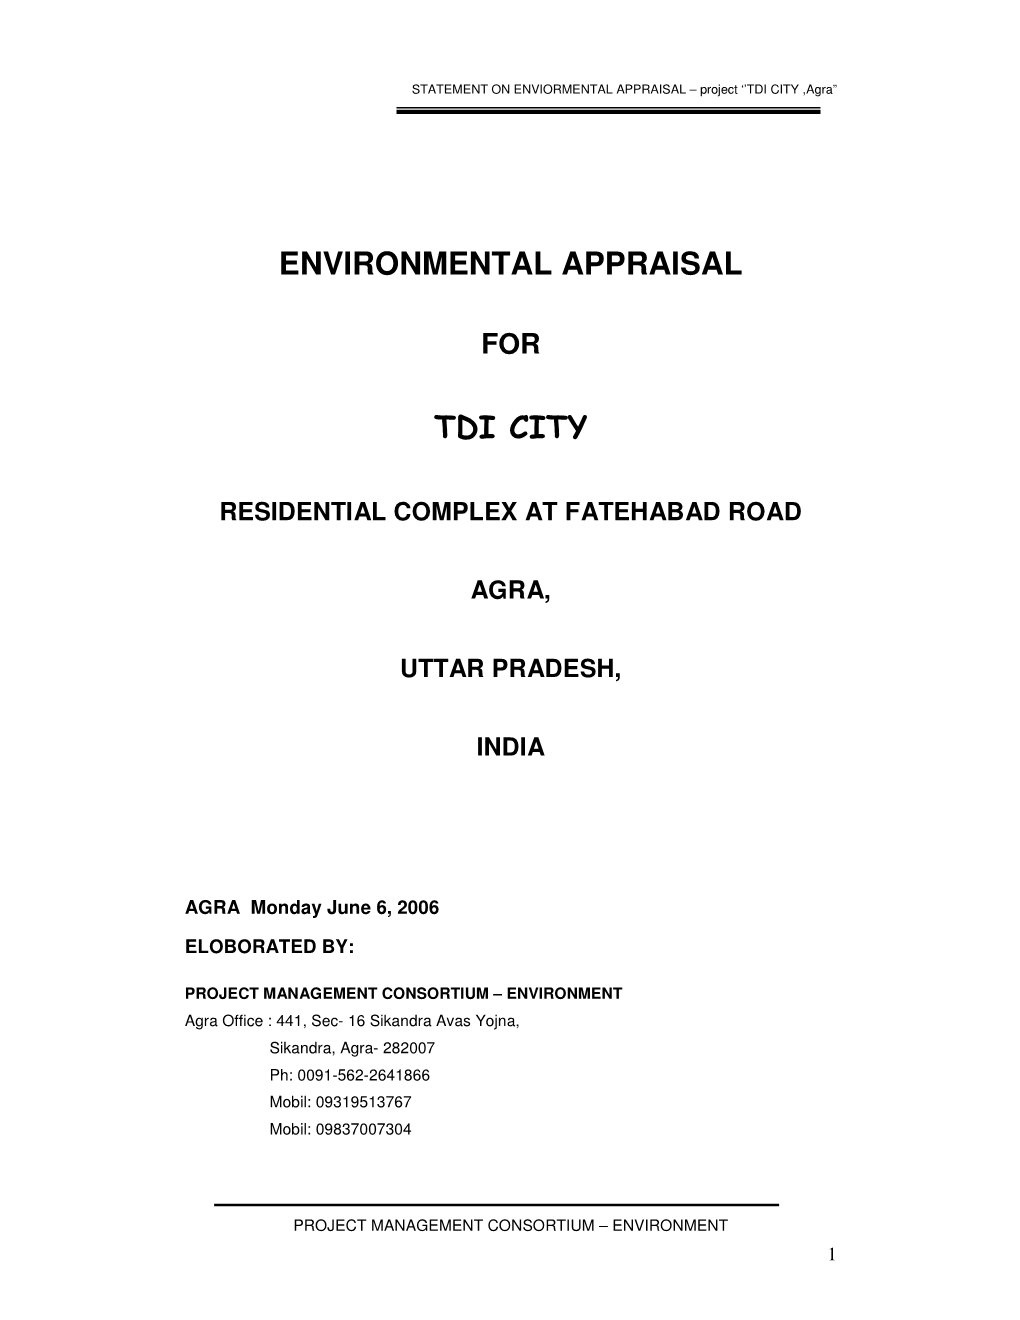 Environmental Appraisal Tdi City